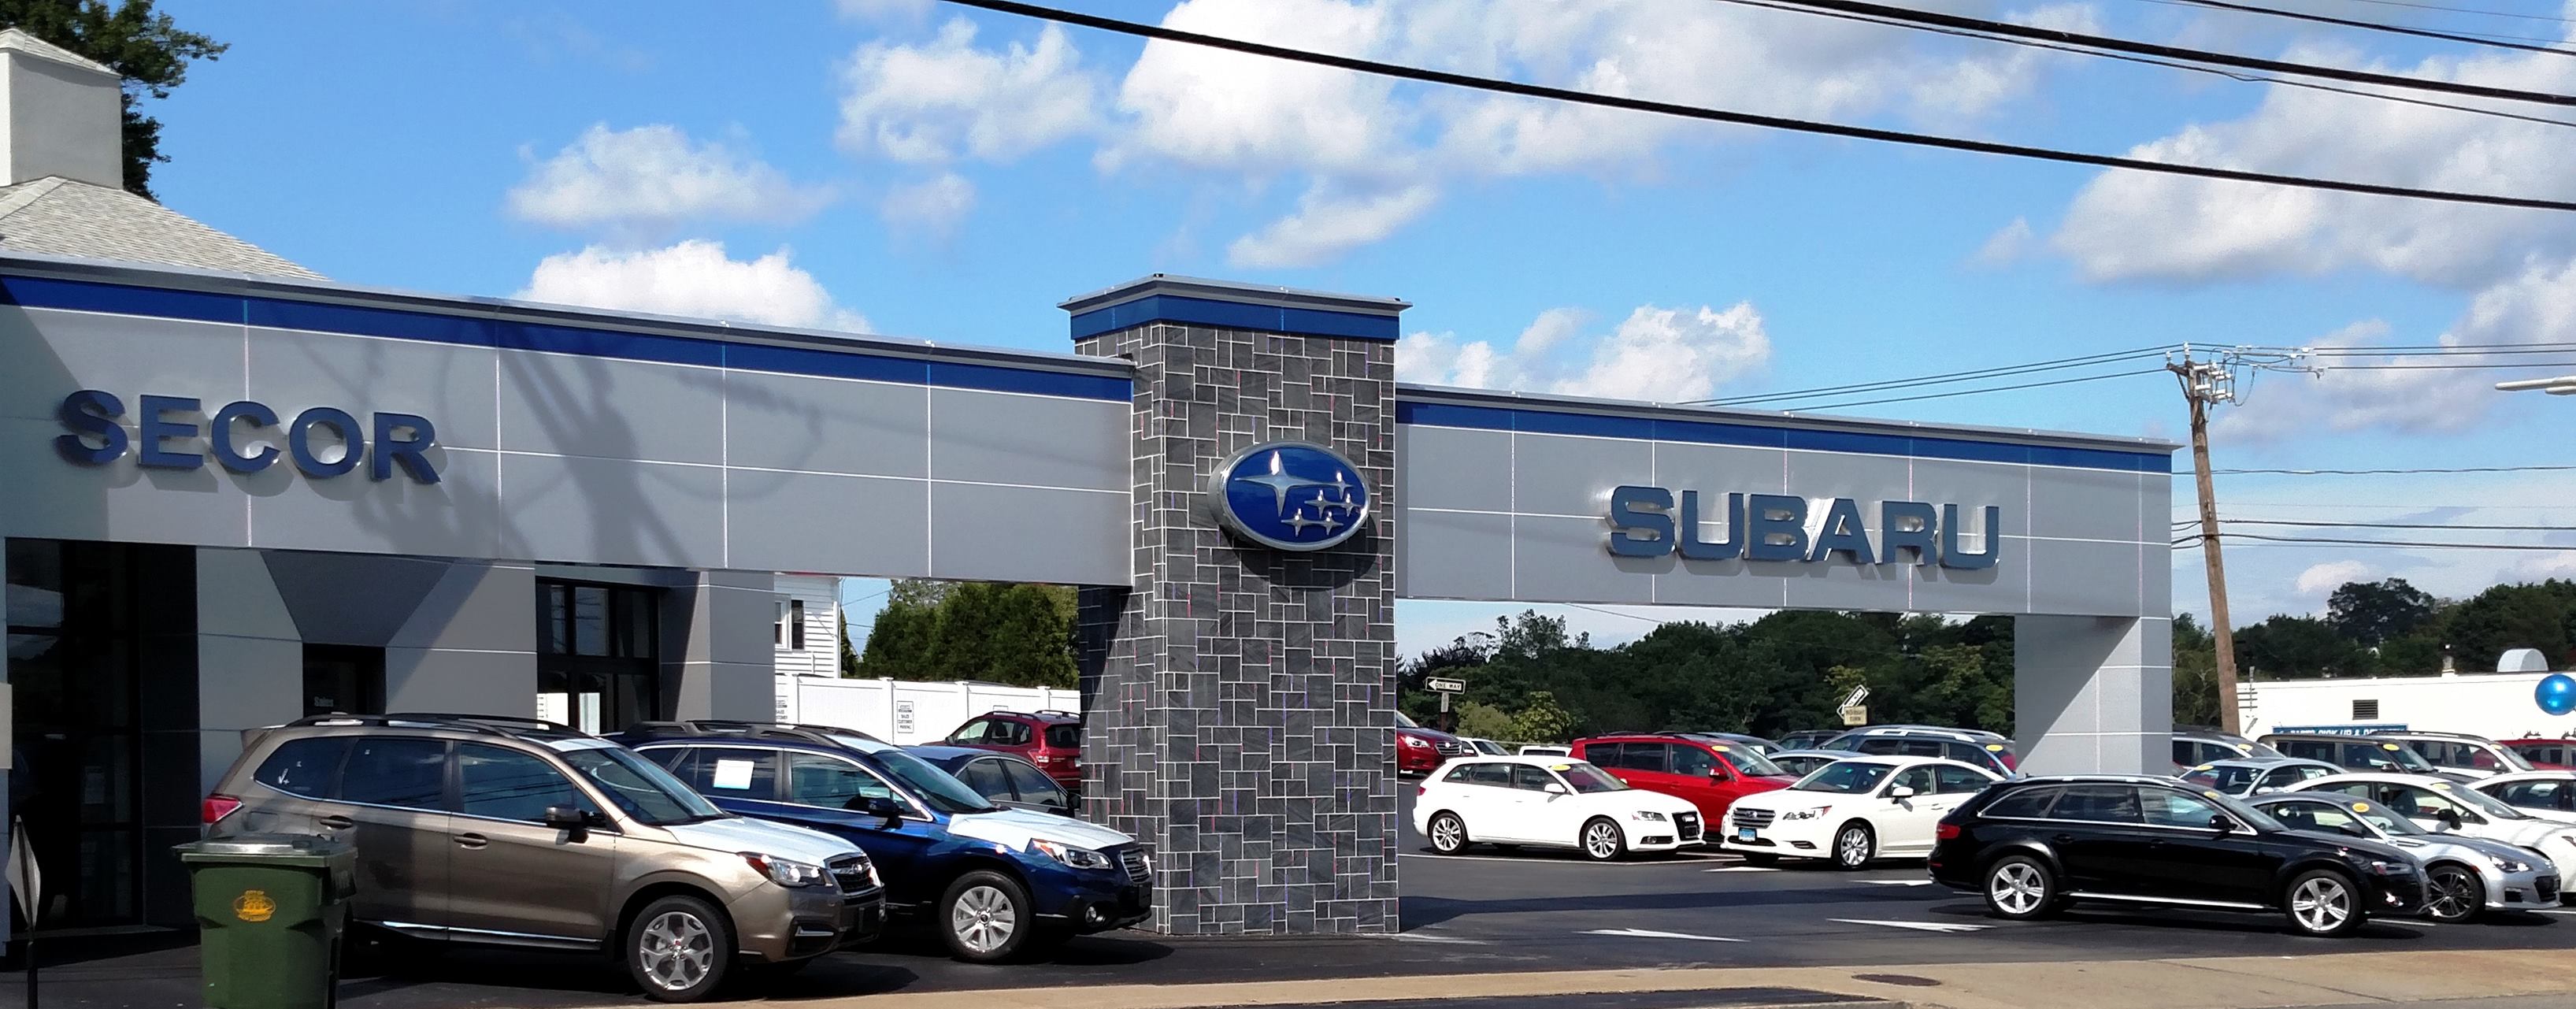 About Secor Subaru| Subaru Dealer Connecticut | New London New Subaru